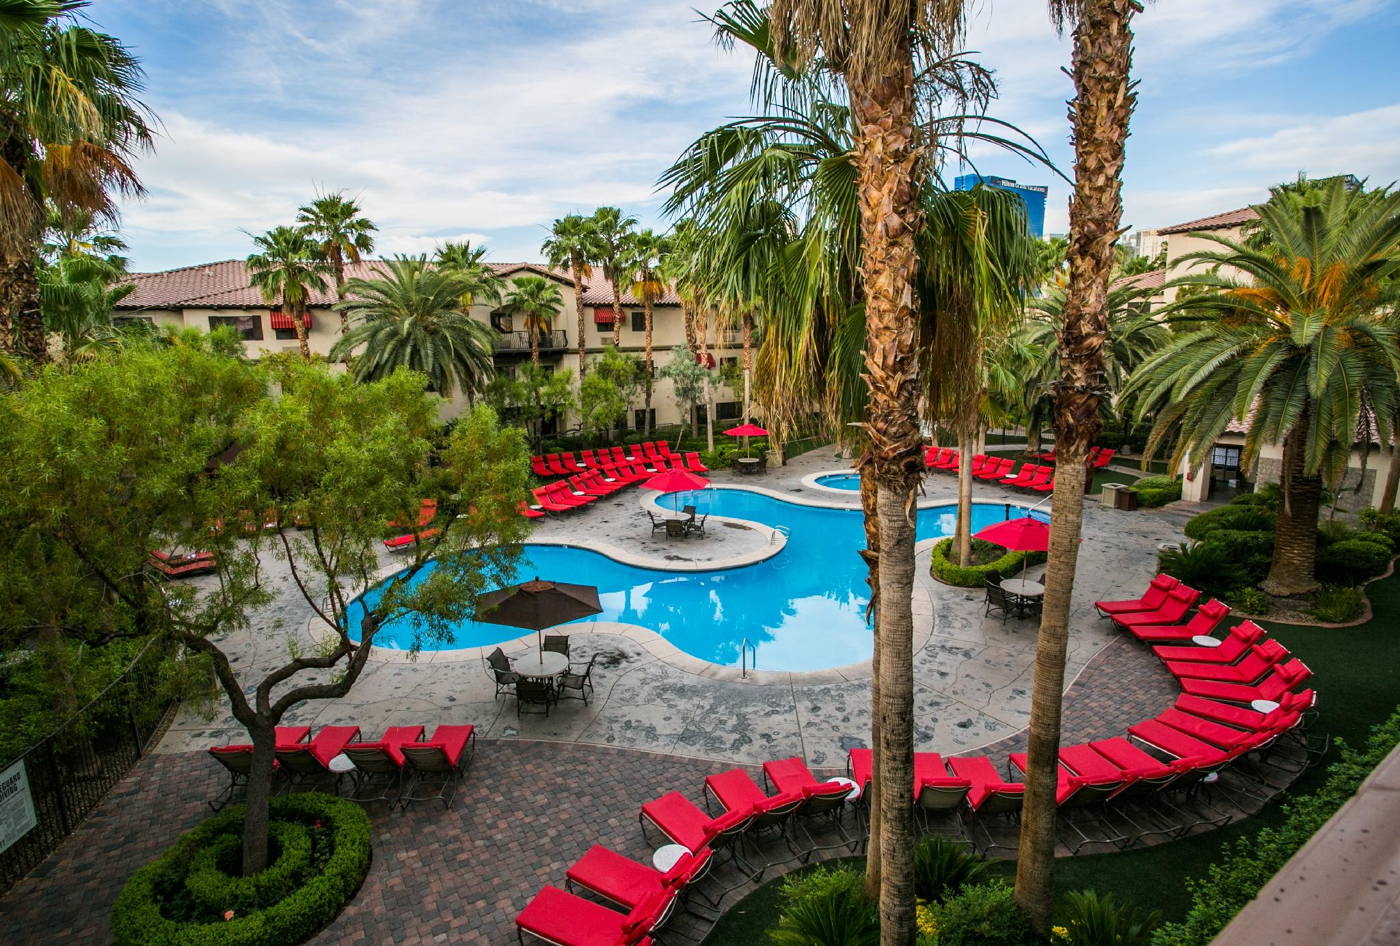 Tuscany Pool and Cabanas Las Vegas